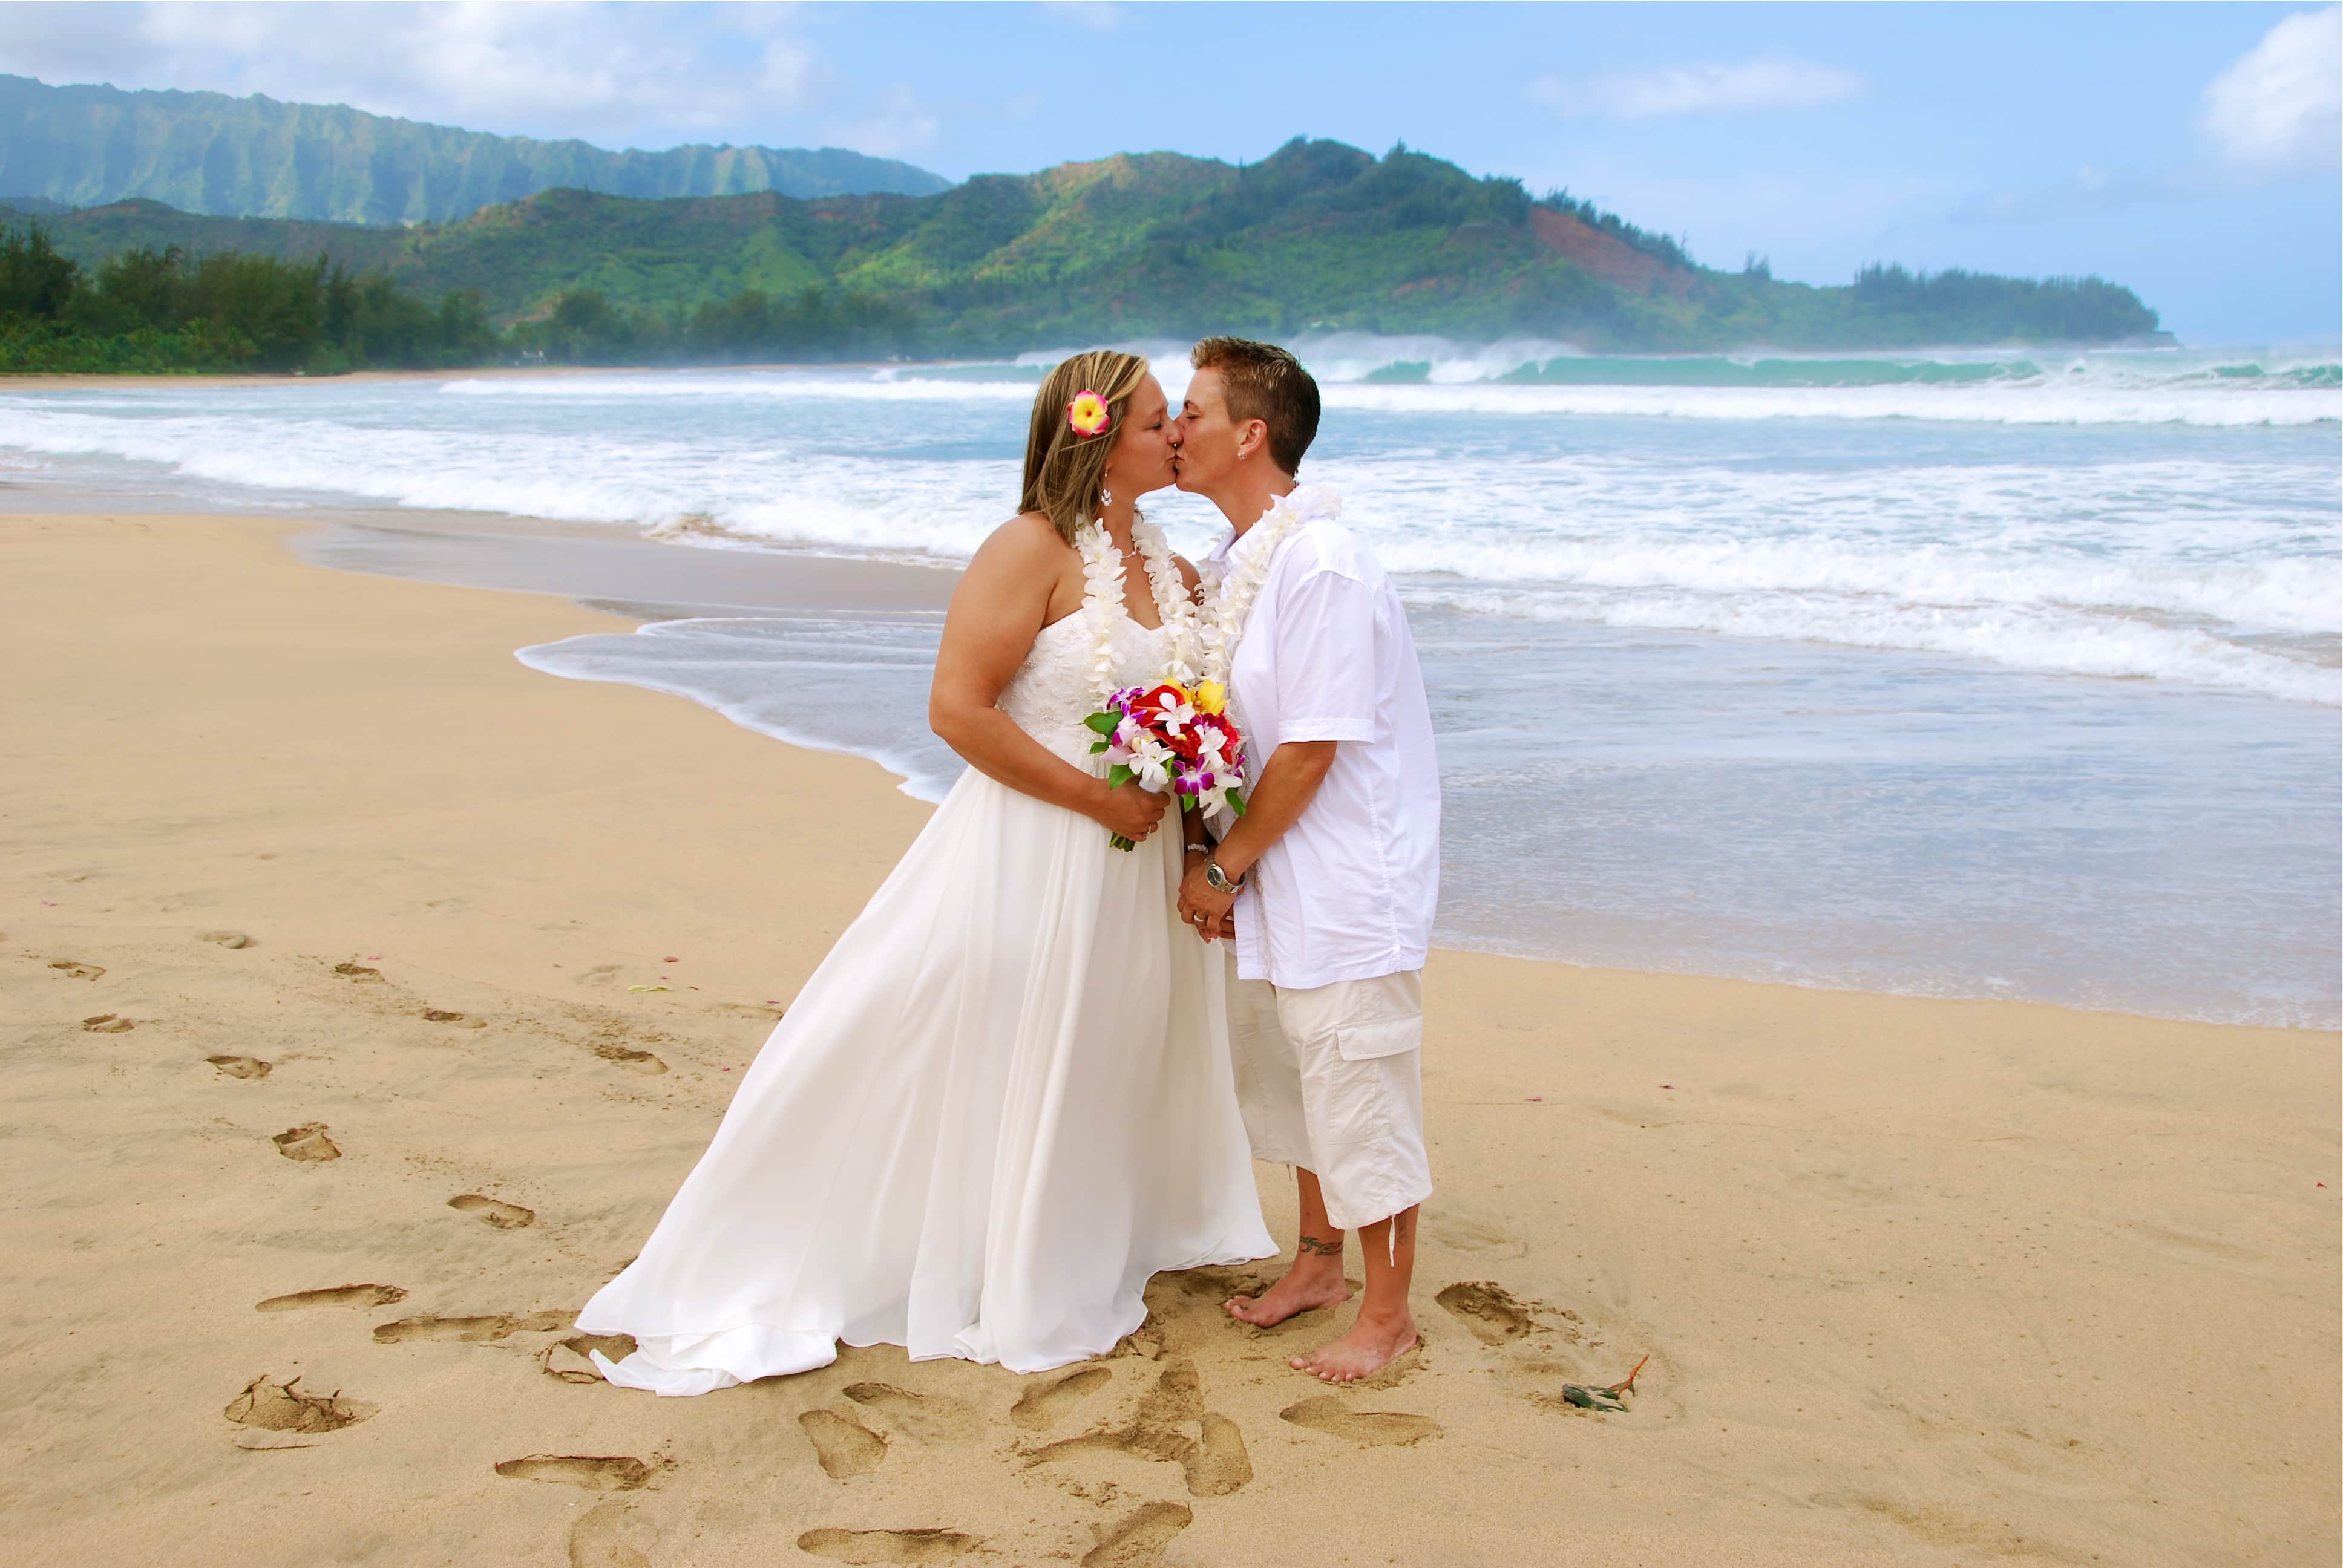 Kauai civil unions